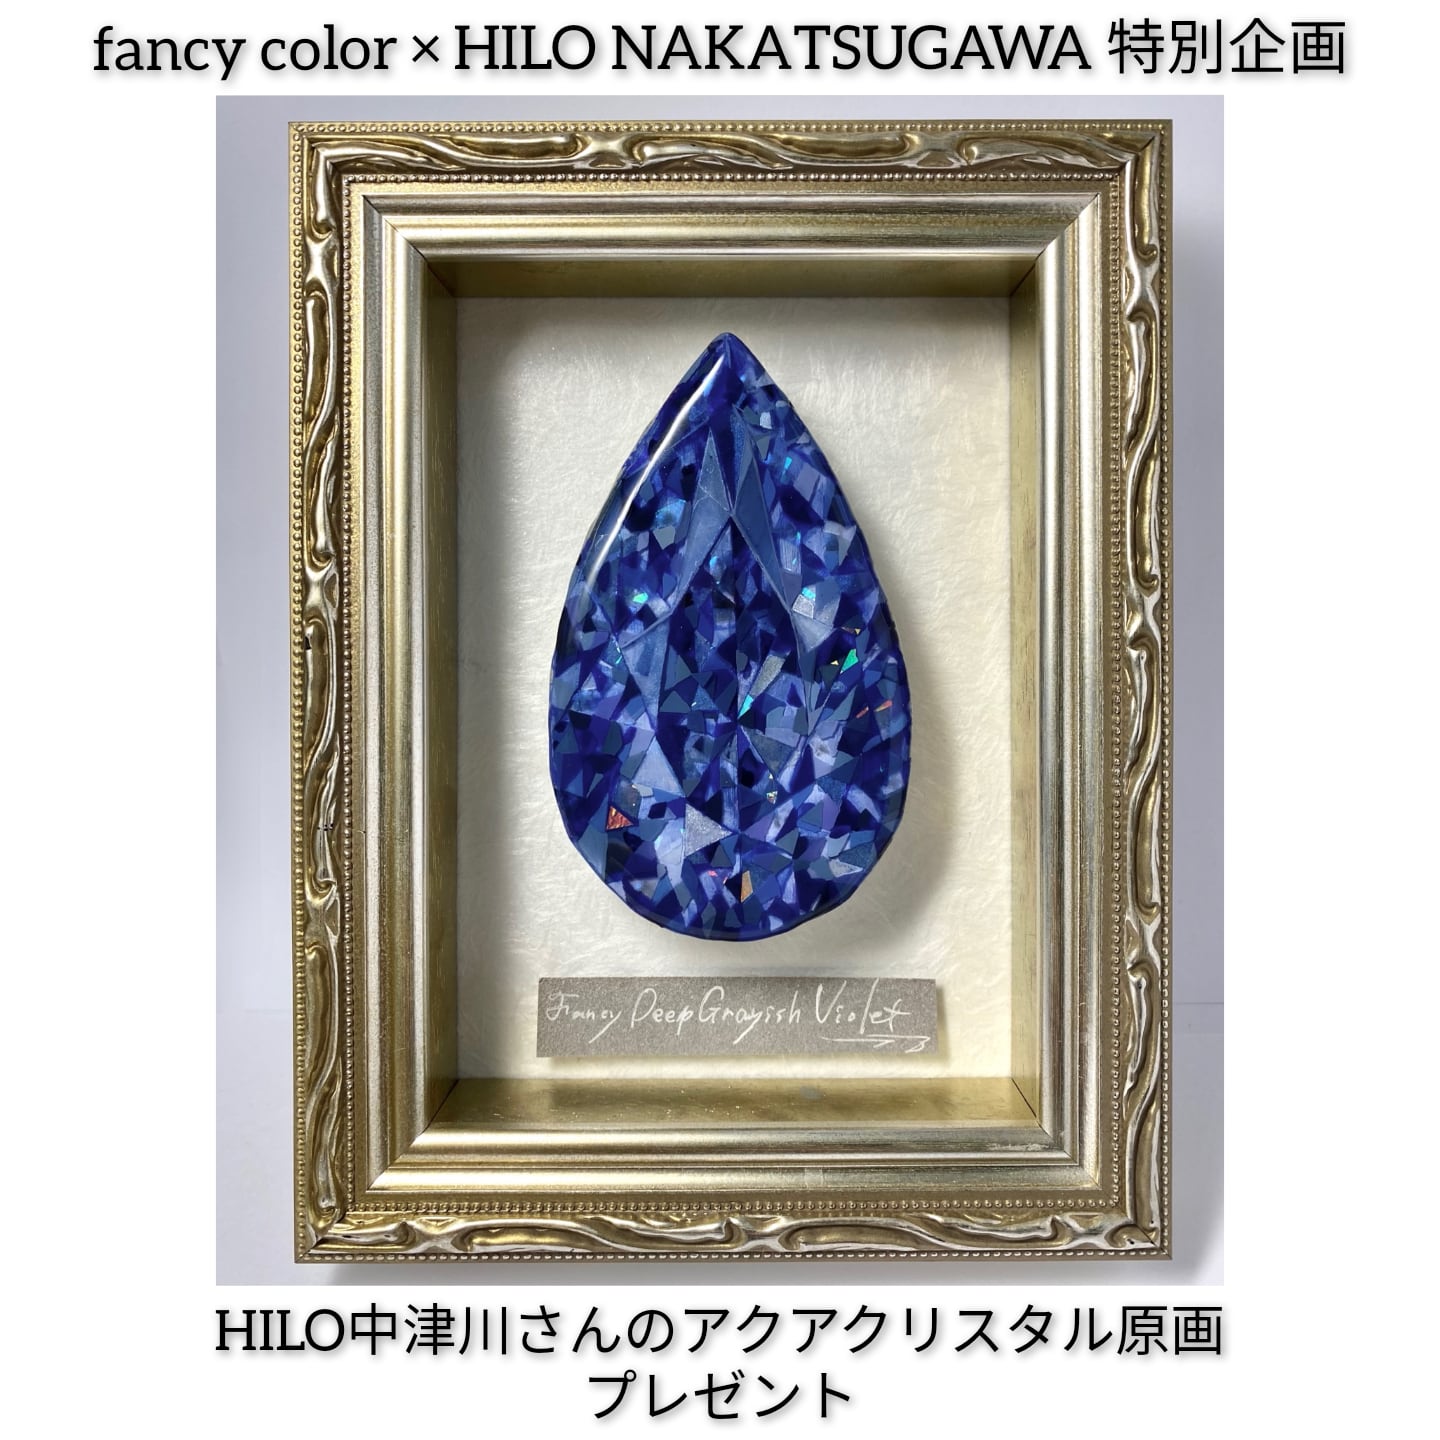 【fancy color × HILO NAKATSUGAWA特別企画】バイオレットダイヤモンドルース 0.089ct fancy deep  grayish violet VVS1(AGT) 、0.09ct fancy gray violet(GIA)のWソーティング付